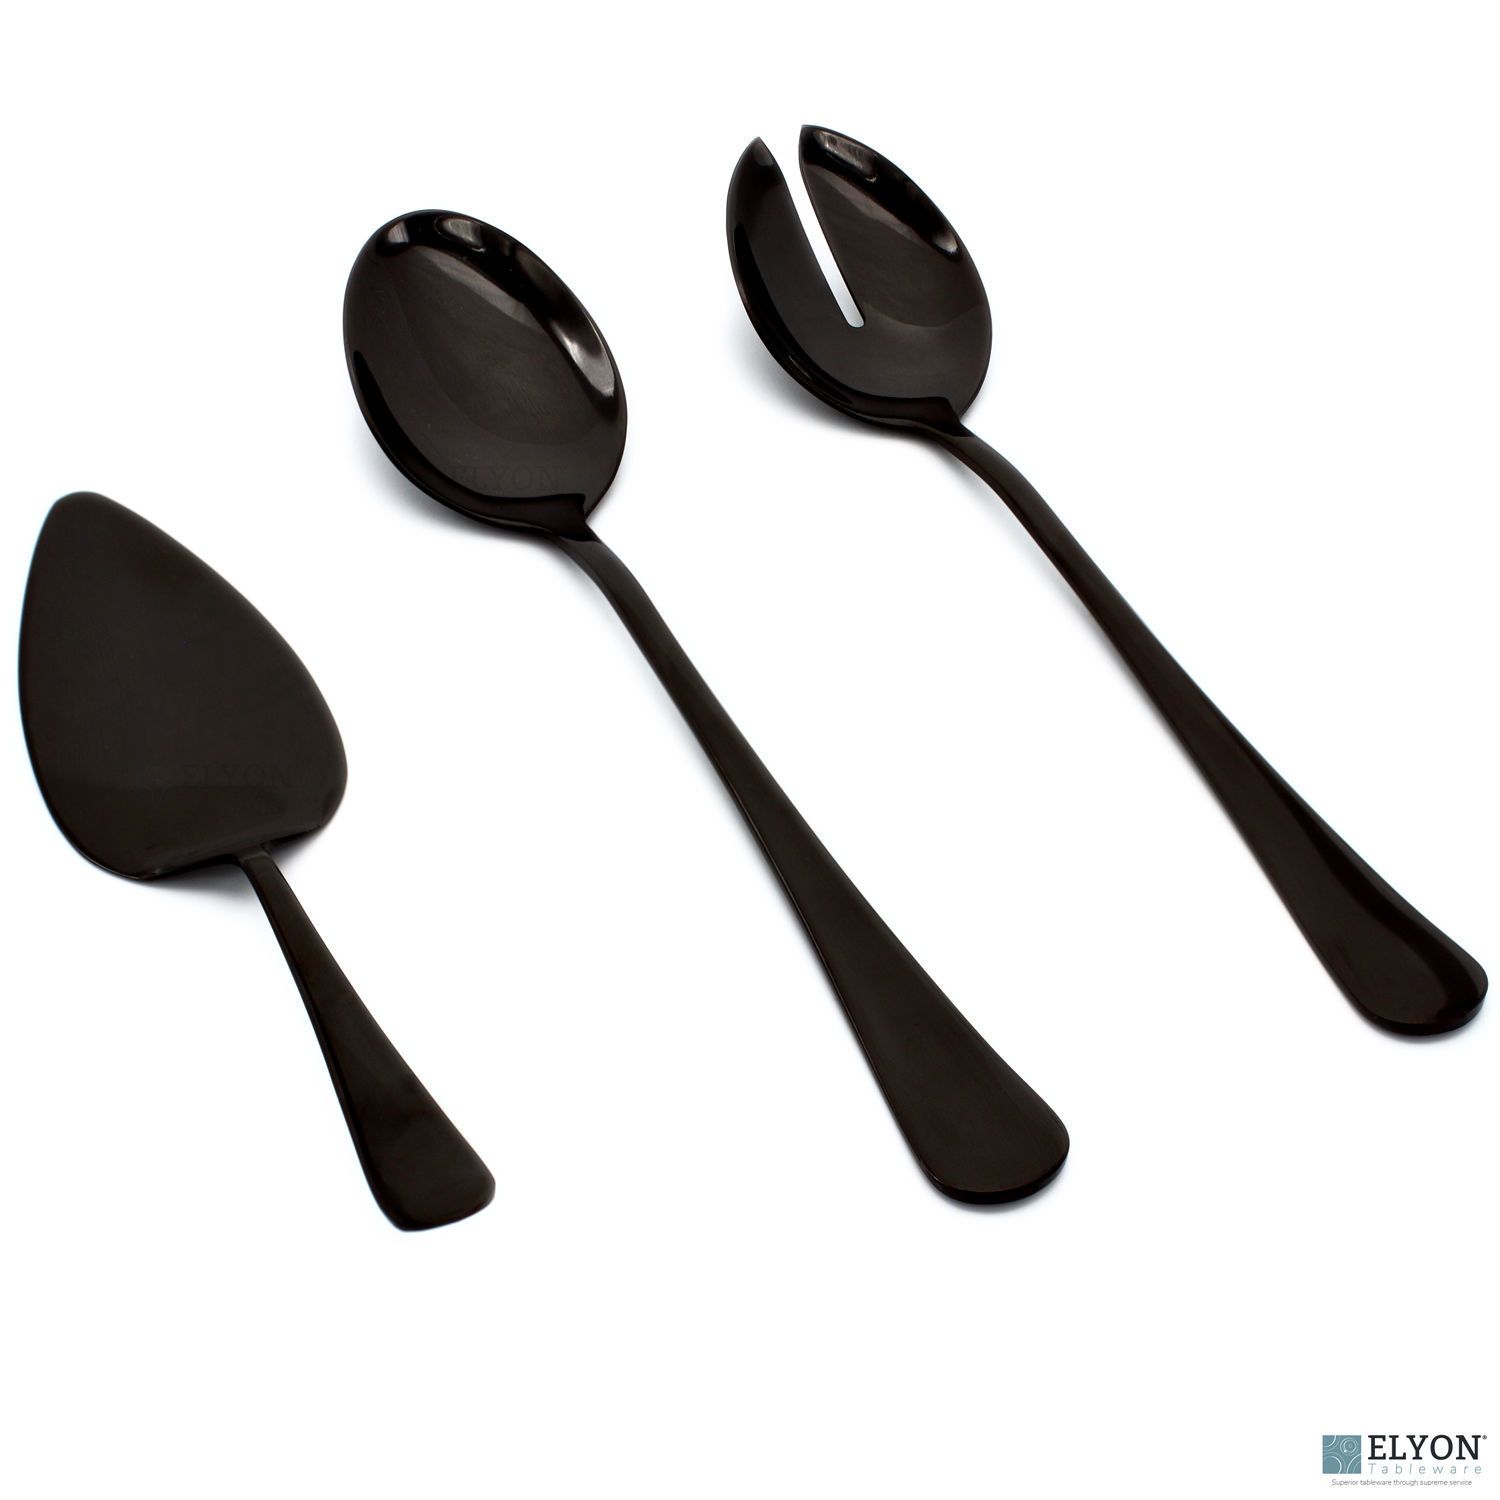 Elyon Tableware 2-Piece Black Flatware Serving Spoons, Stainless Steel Hostess Set, Reflective Mi... | Walmart (US)